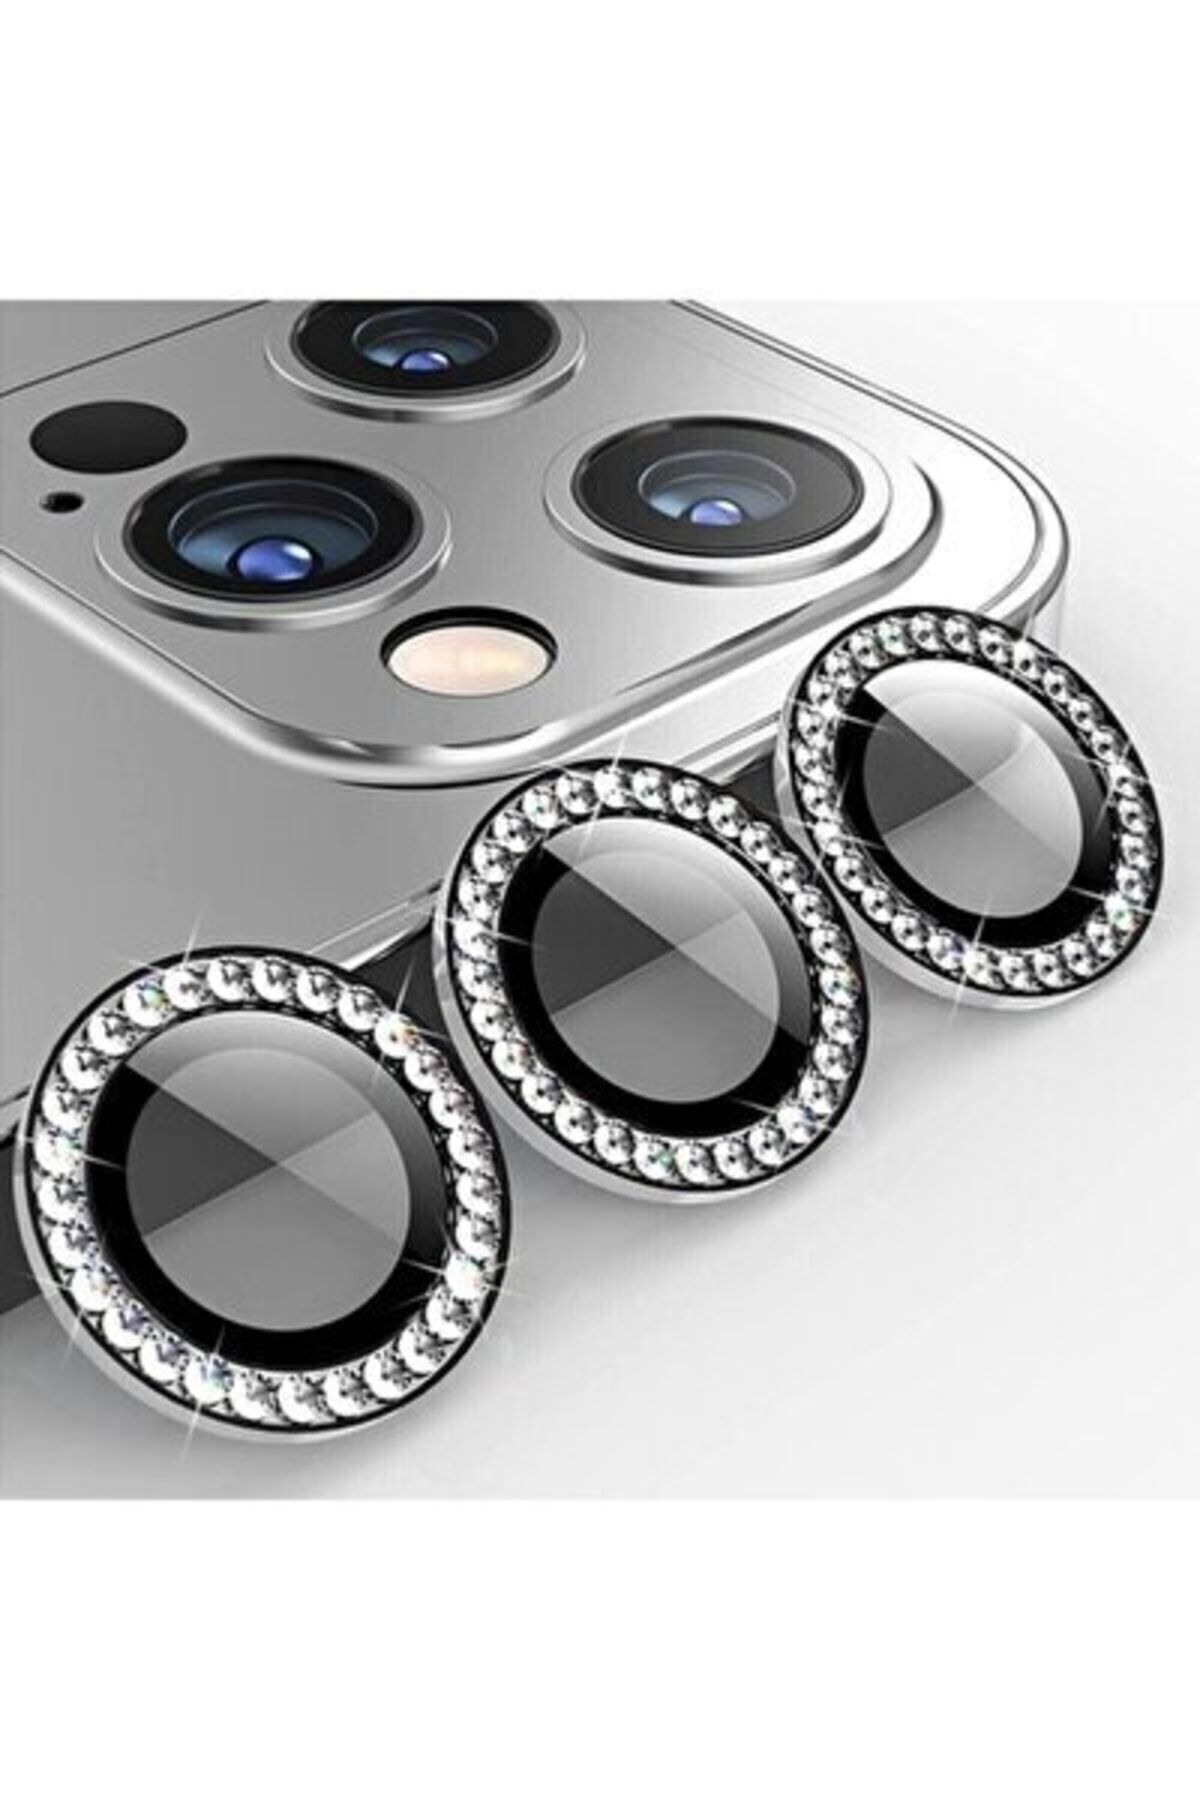 Vip Case Iphone 11 Pro/11 Pro Max / Iphone 12 Pro Modelleri Ile Uyumlu Swarovski Taşlı Kamera Lens Koruyucu